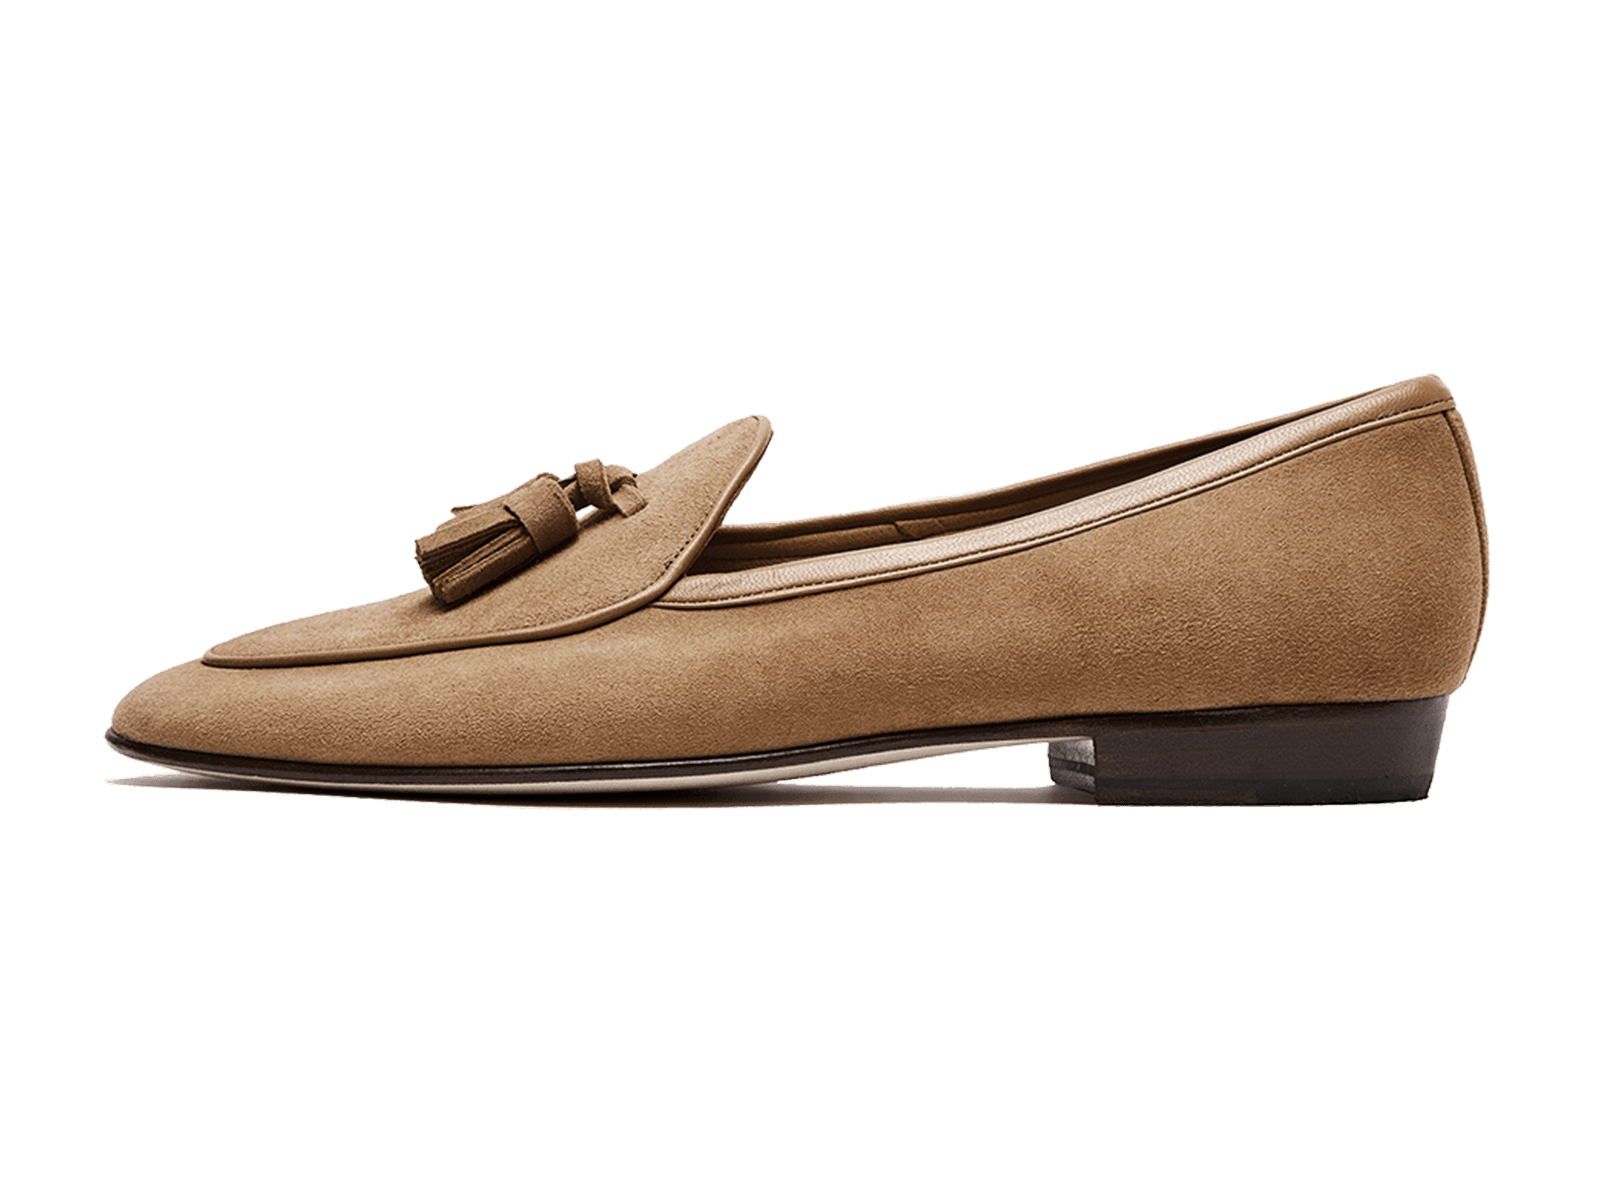 Sagan Classic Tassel Loafers in Sahara Asteria Suede